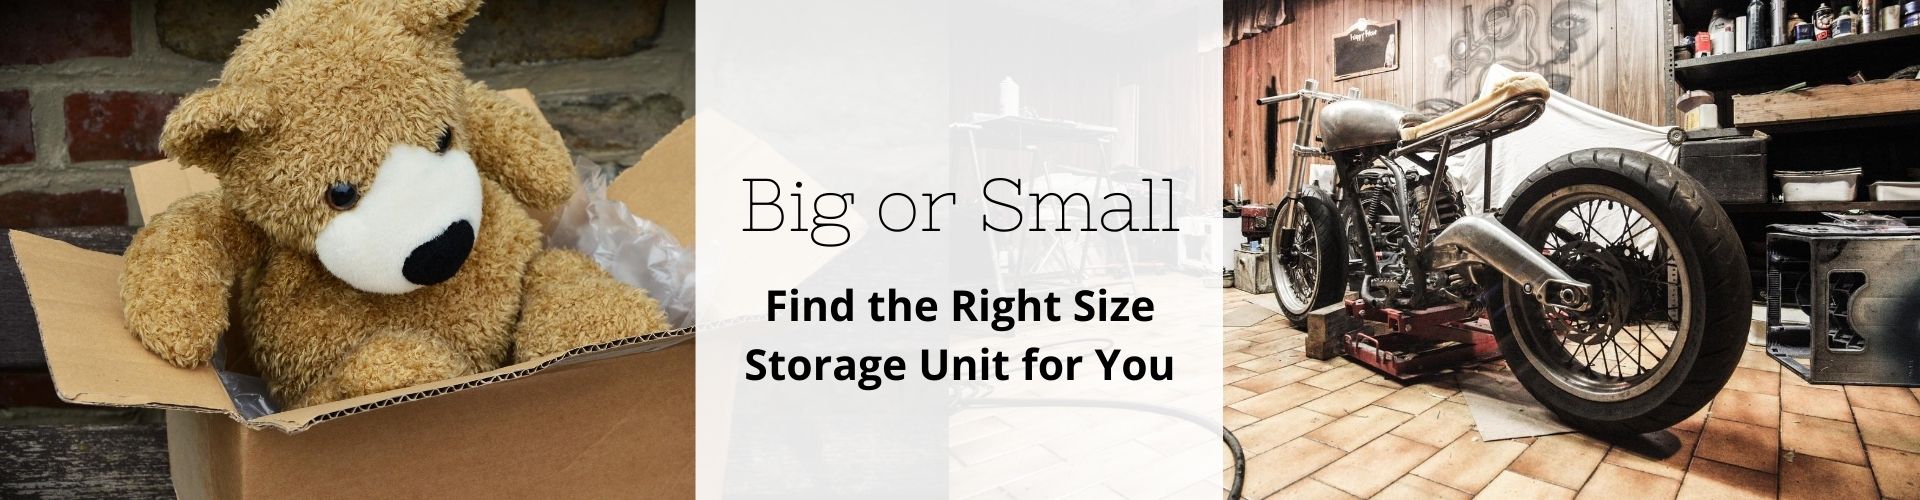 Storage Unit Size Guide Hero